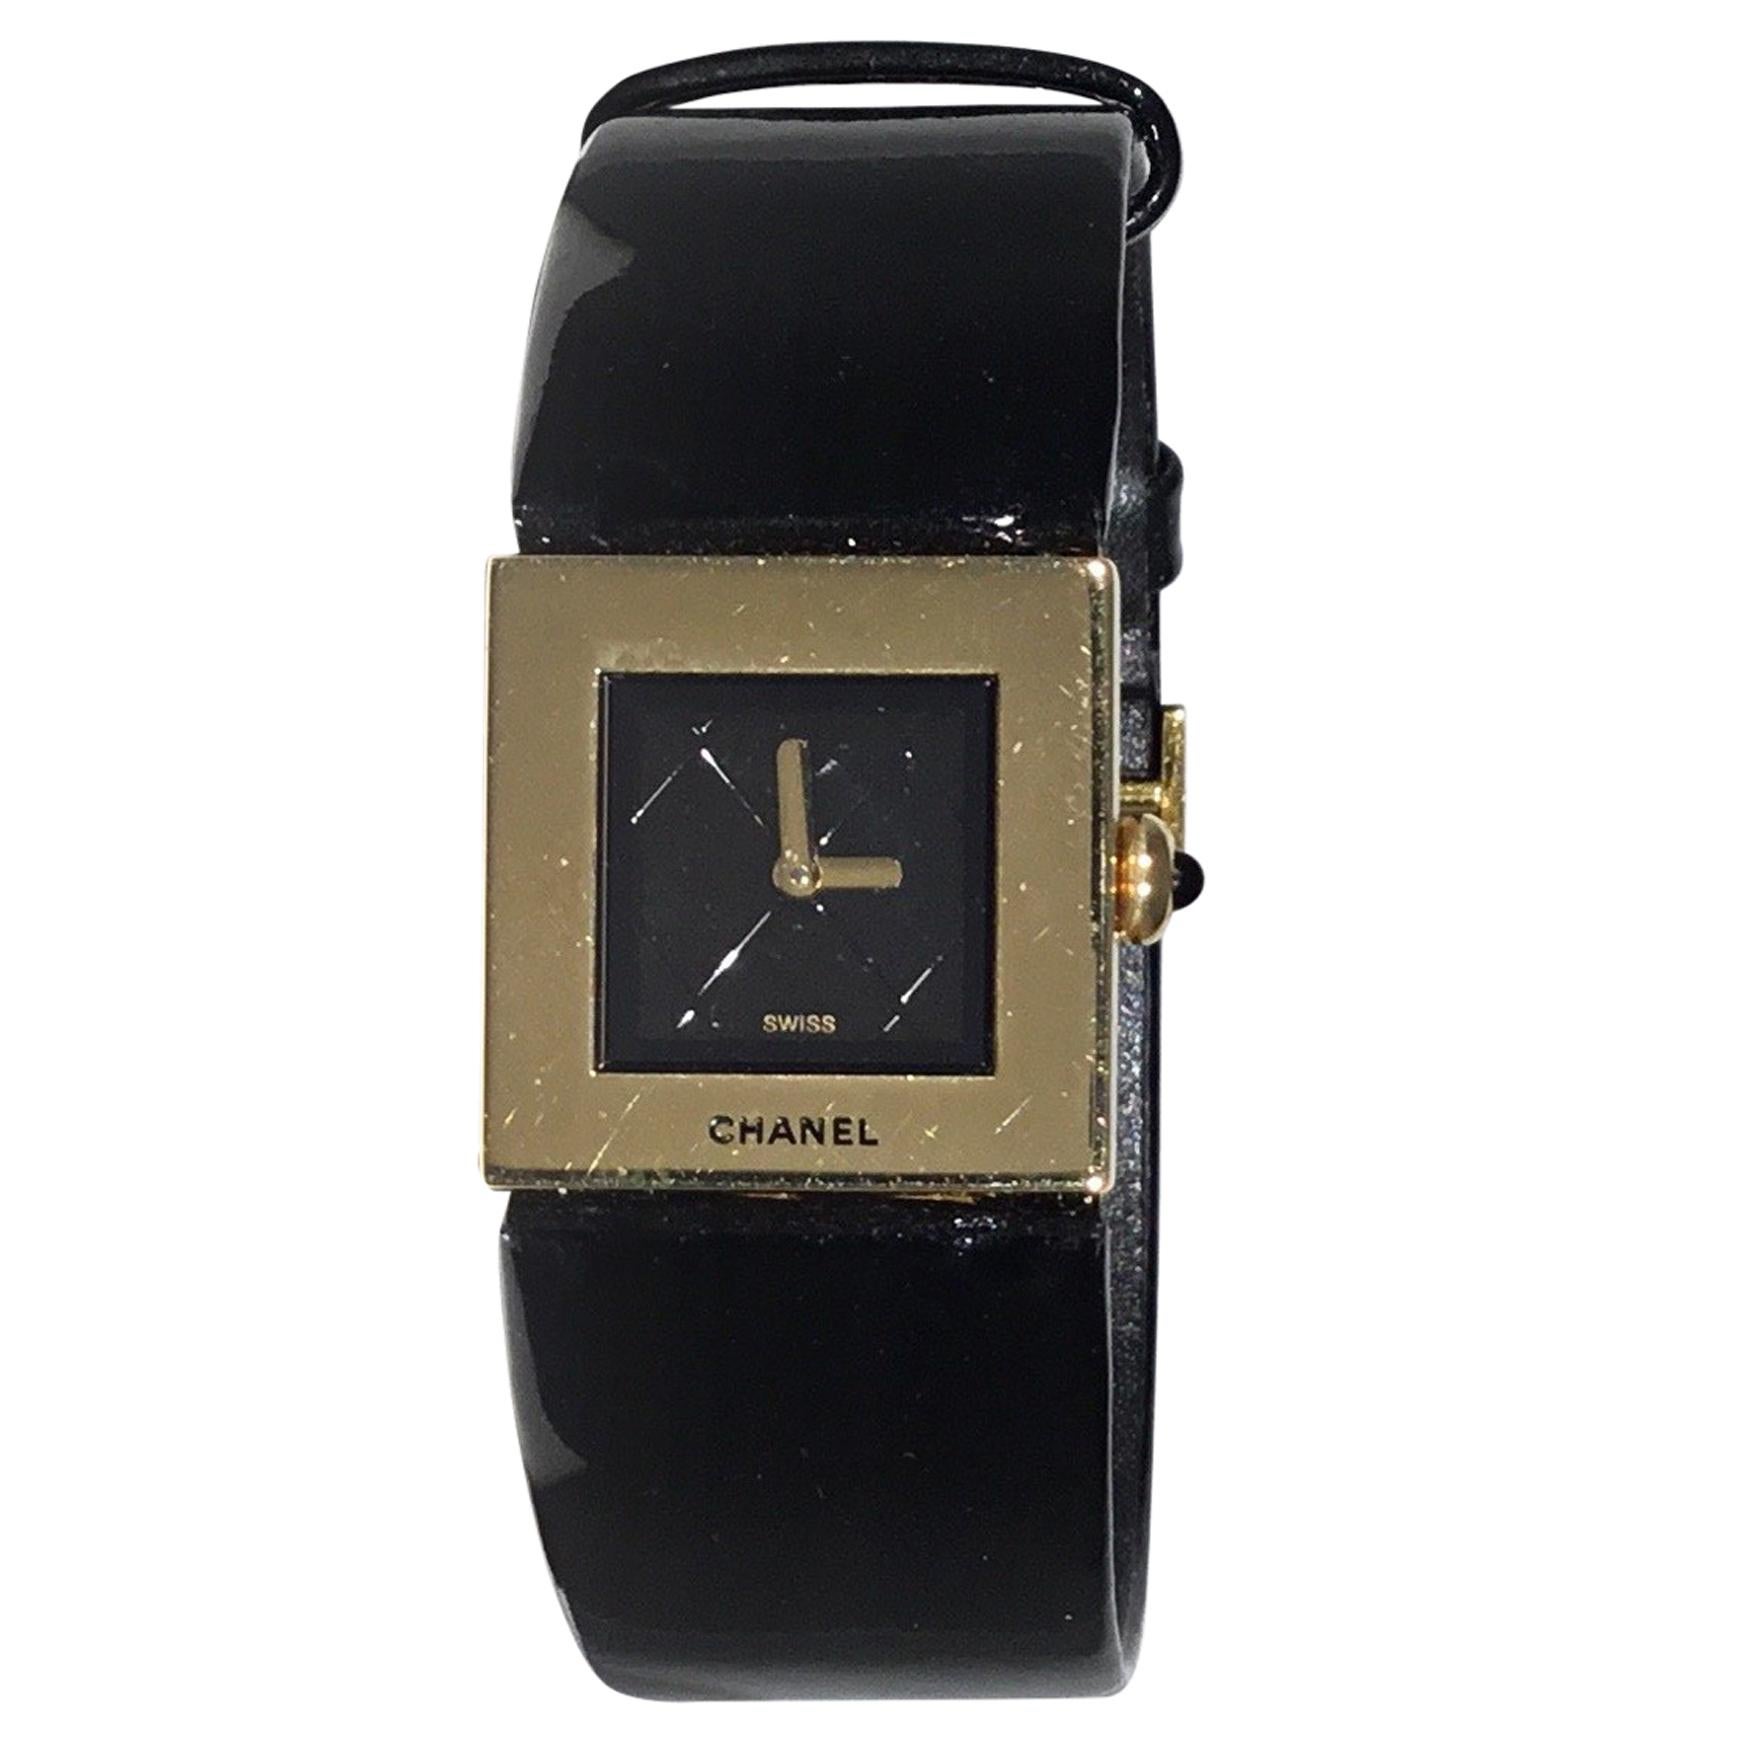 Chanel 18k Gold Matelassé Watch w/ Patent Leather Band